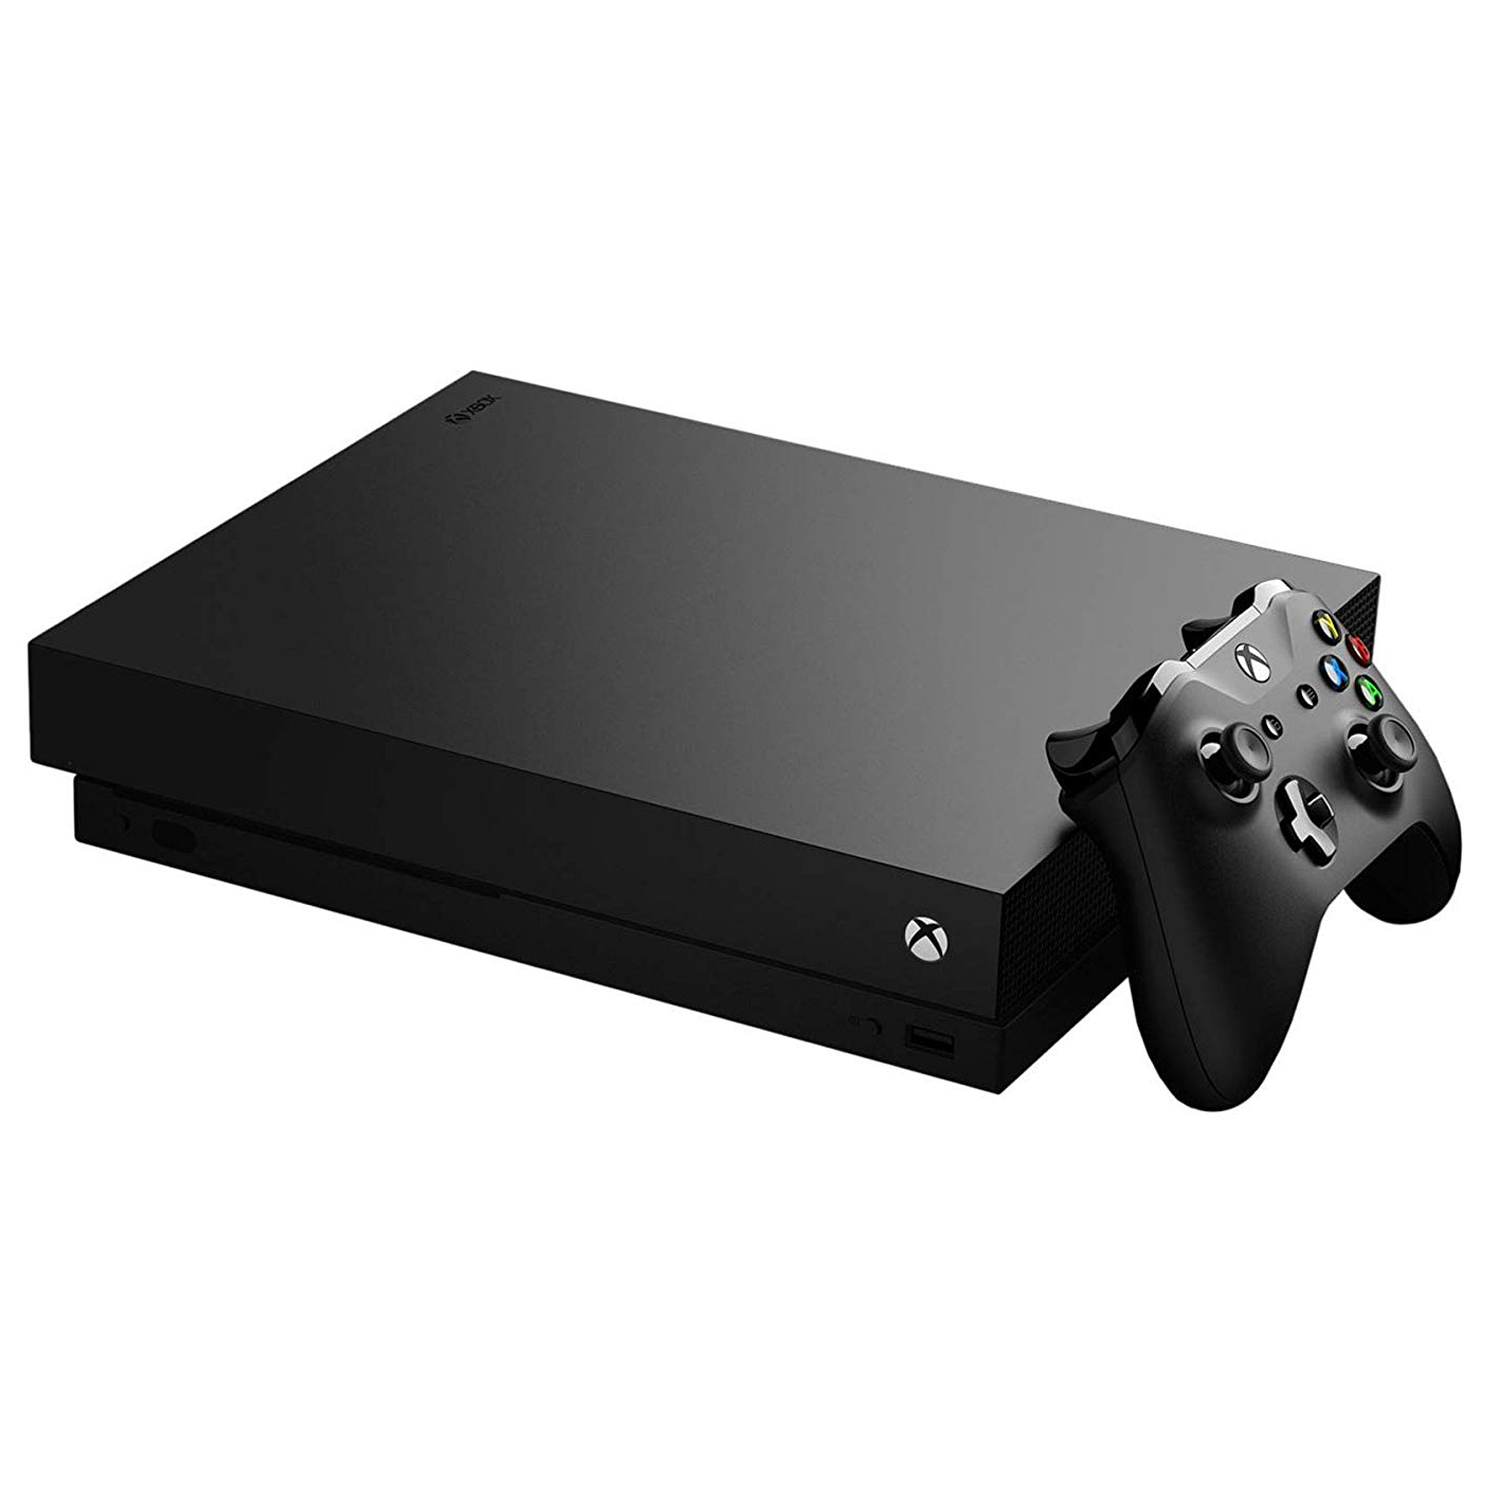 Restored Microsoft Xbox One X 1TB, 4K Ultra HD Gaming Console in Black, FMQ-00042, 889842246971 (Refurbished) - image 2 of 9